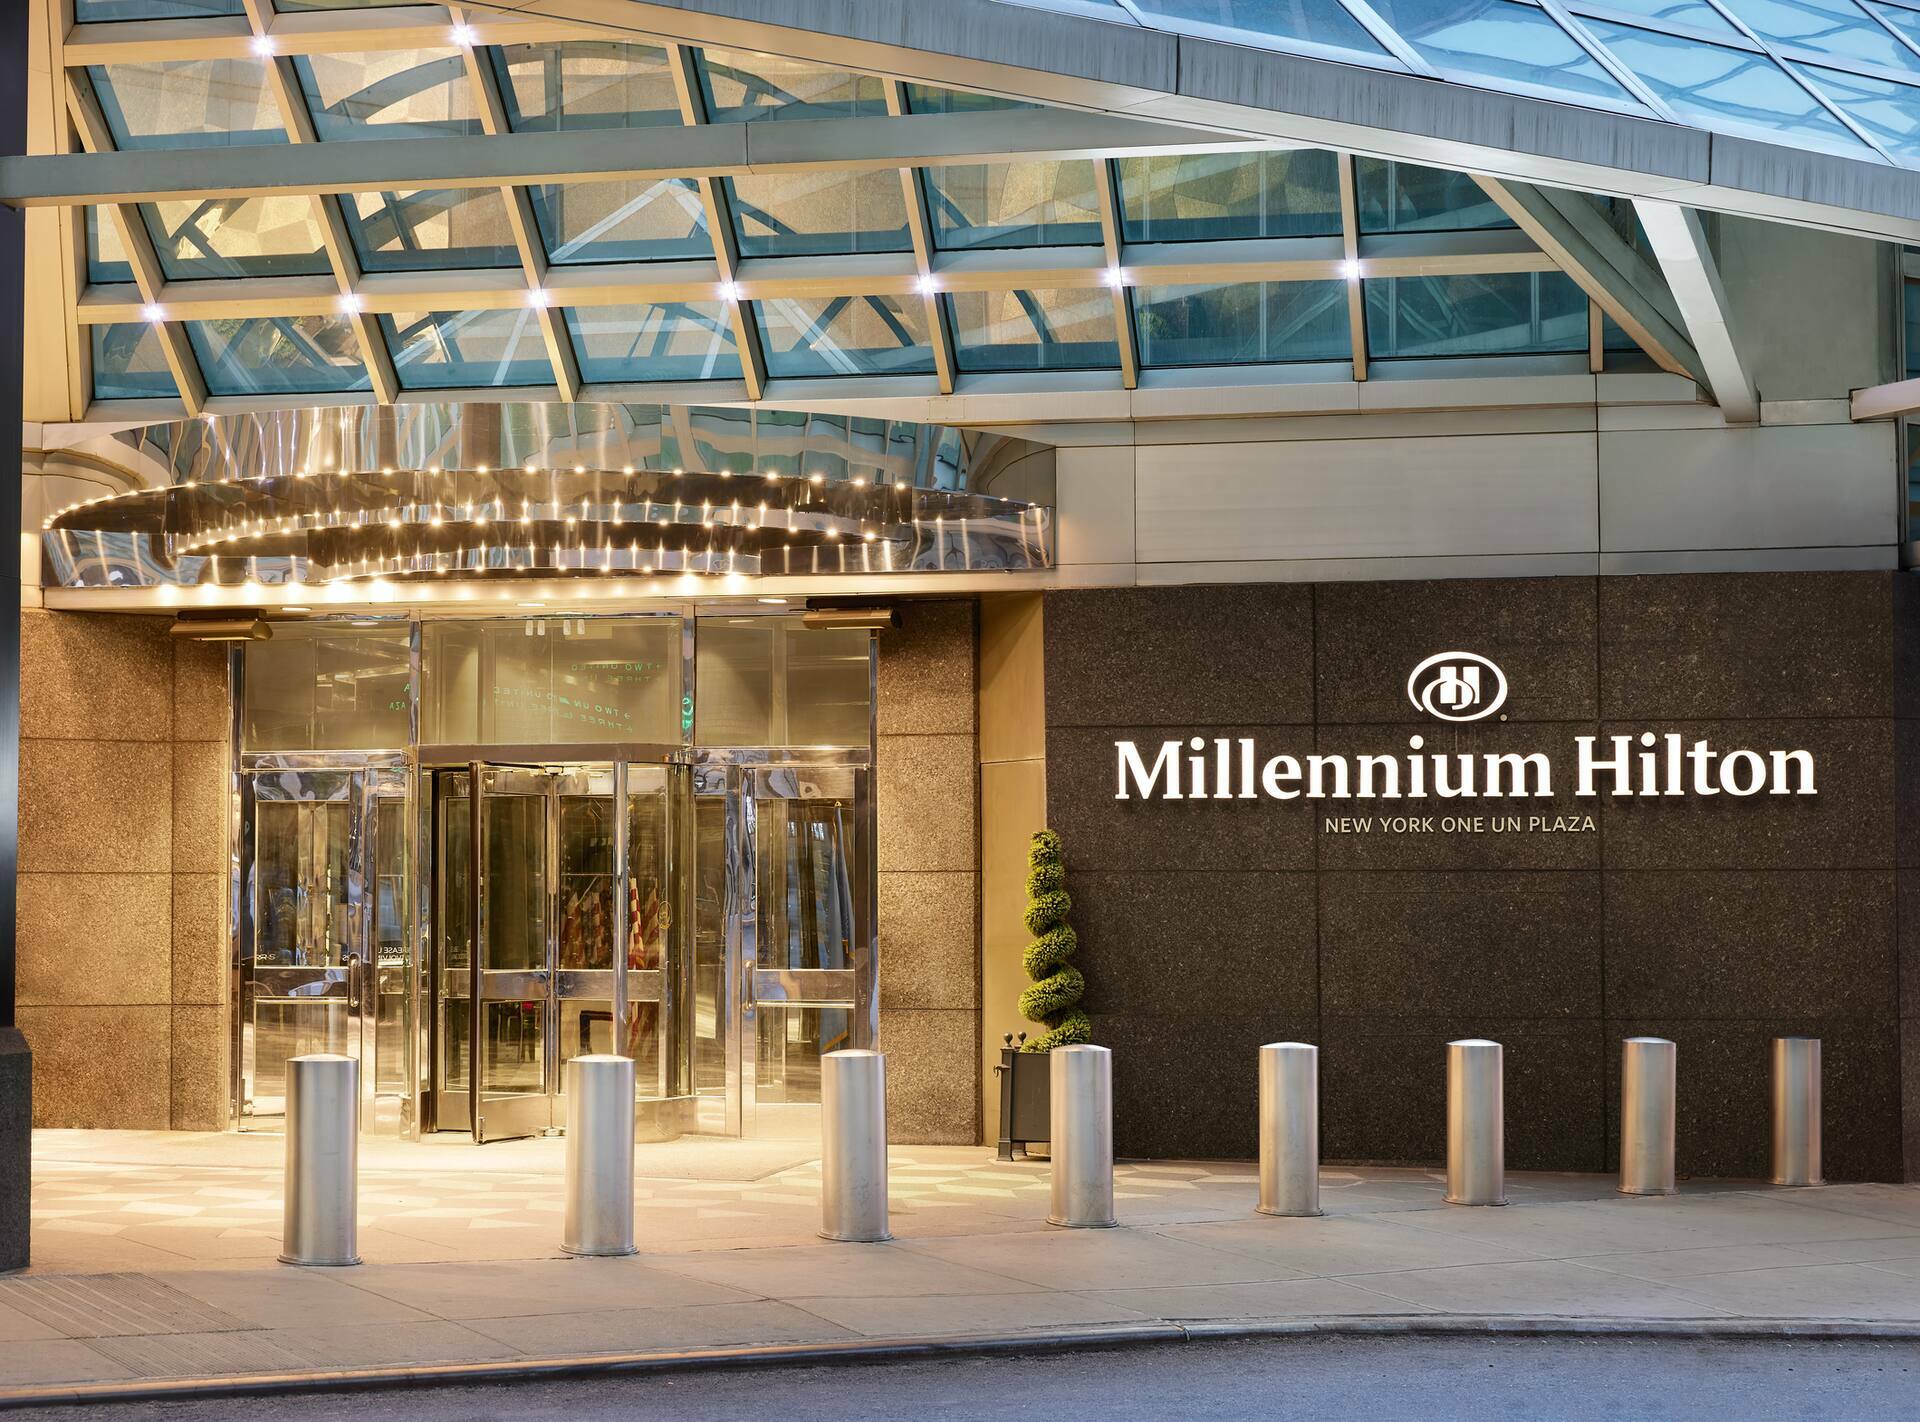 Photo of Millennium Hilton New York One UN Plaza, New York, NY